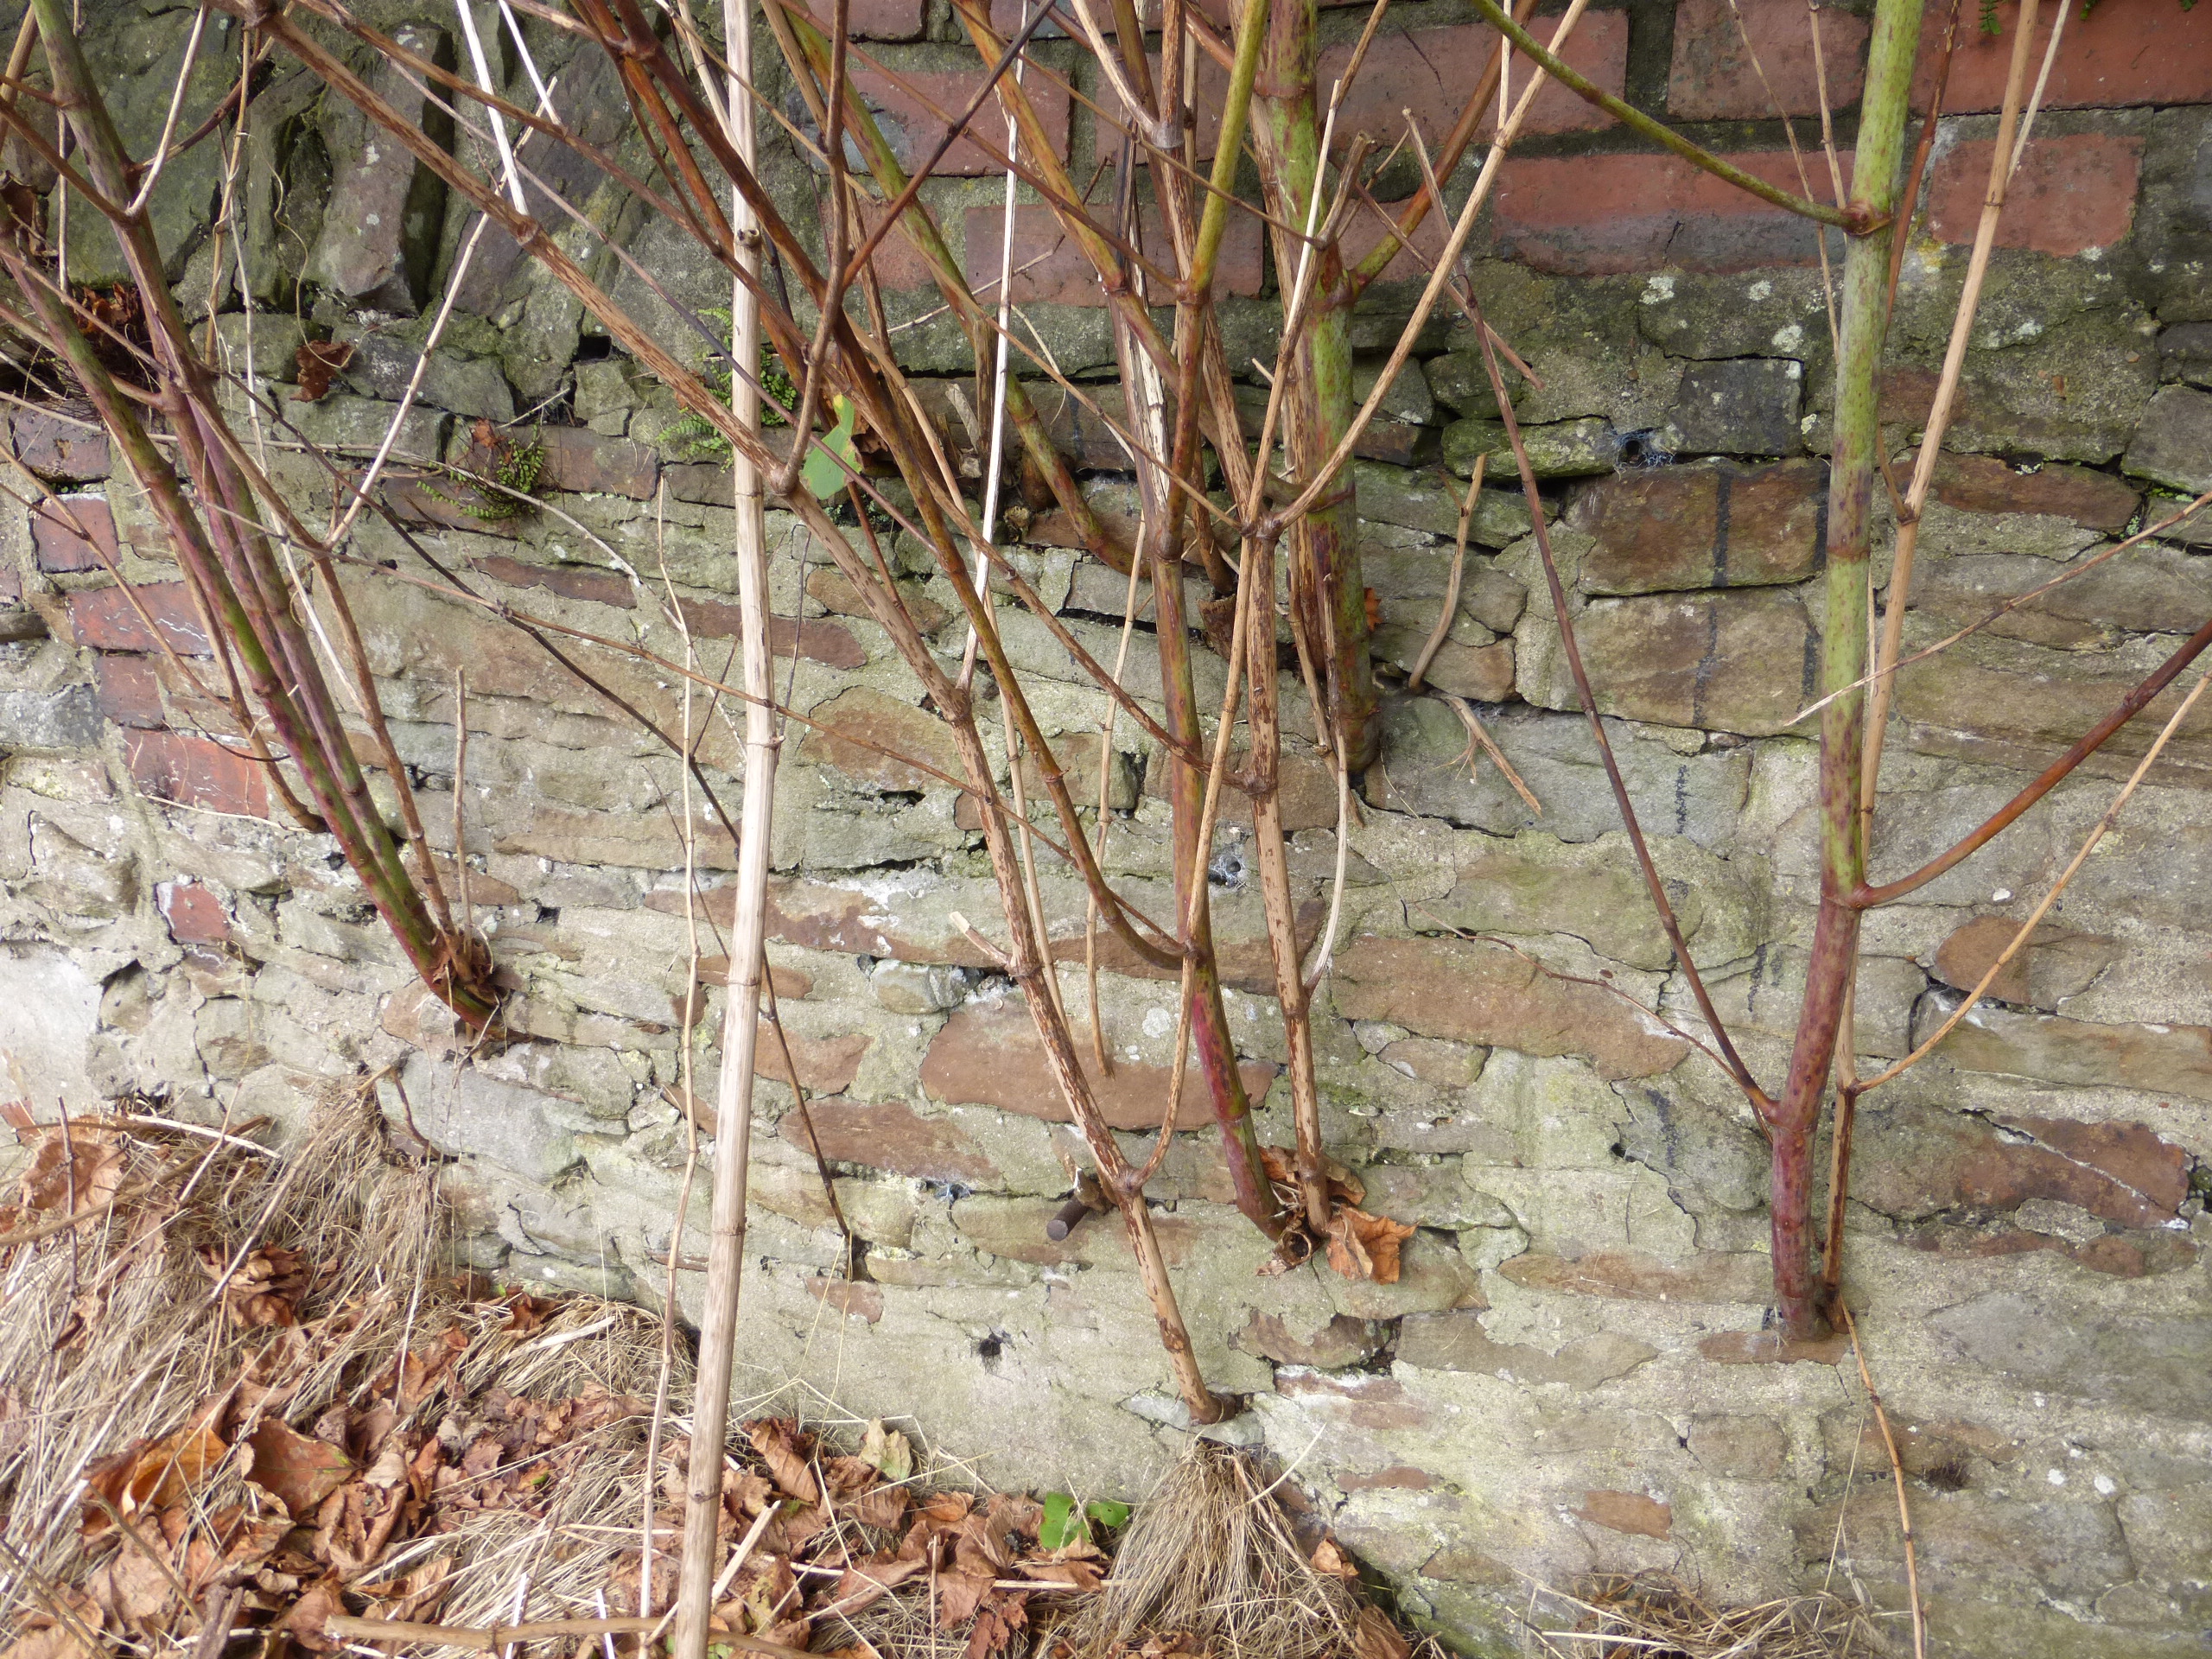 Japanese knotweed growing through bricks